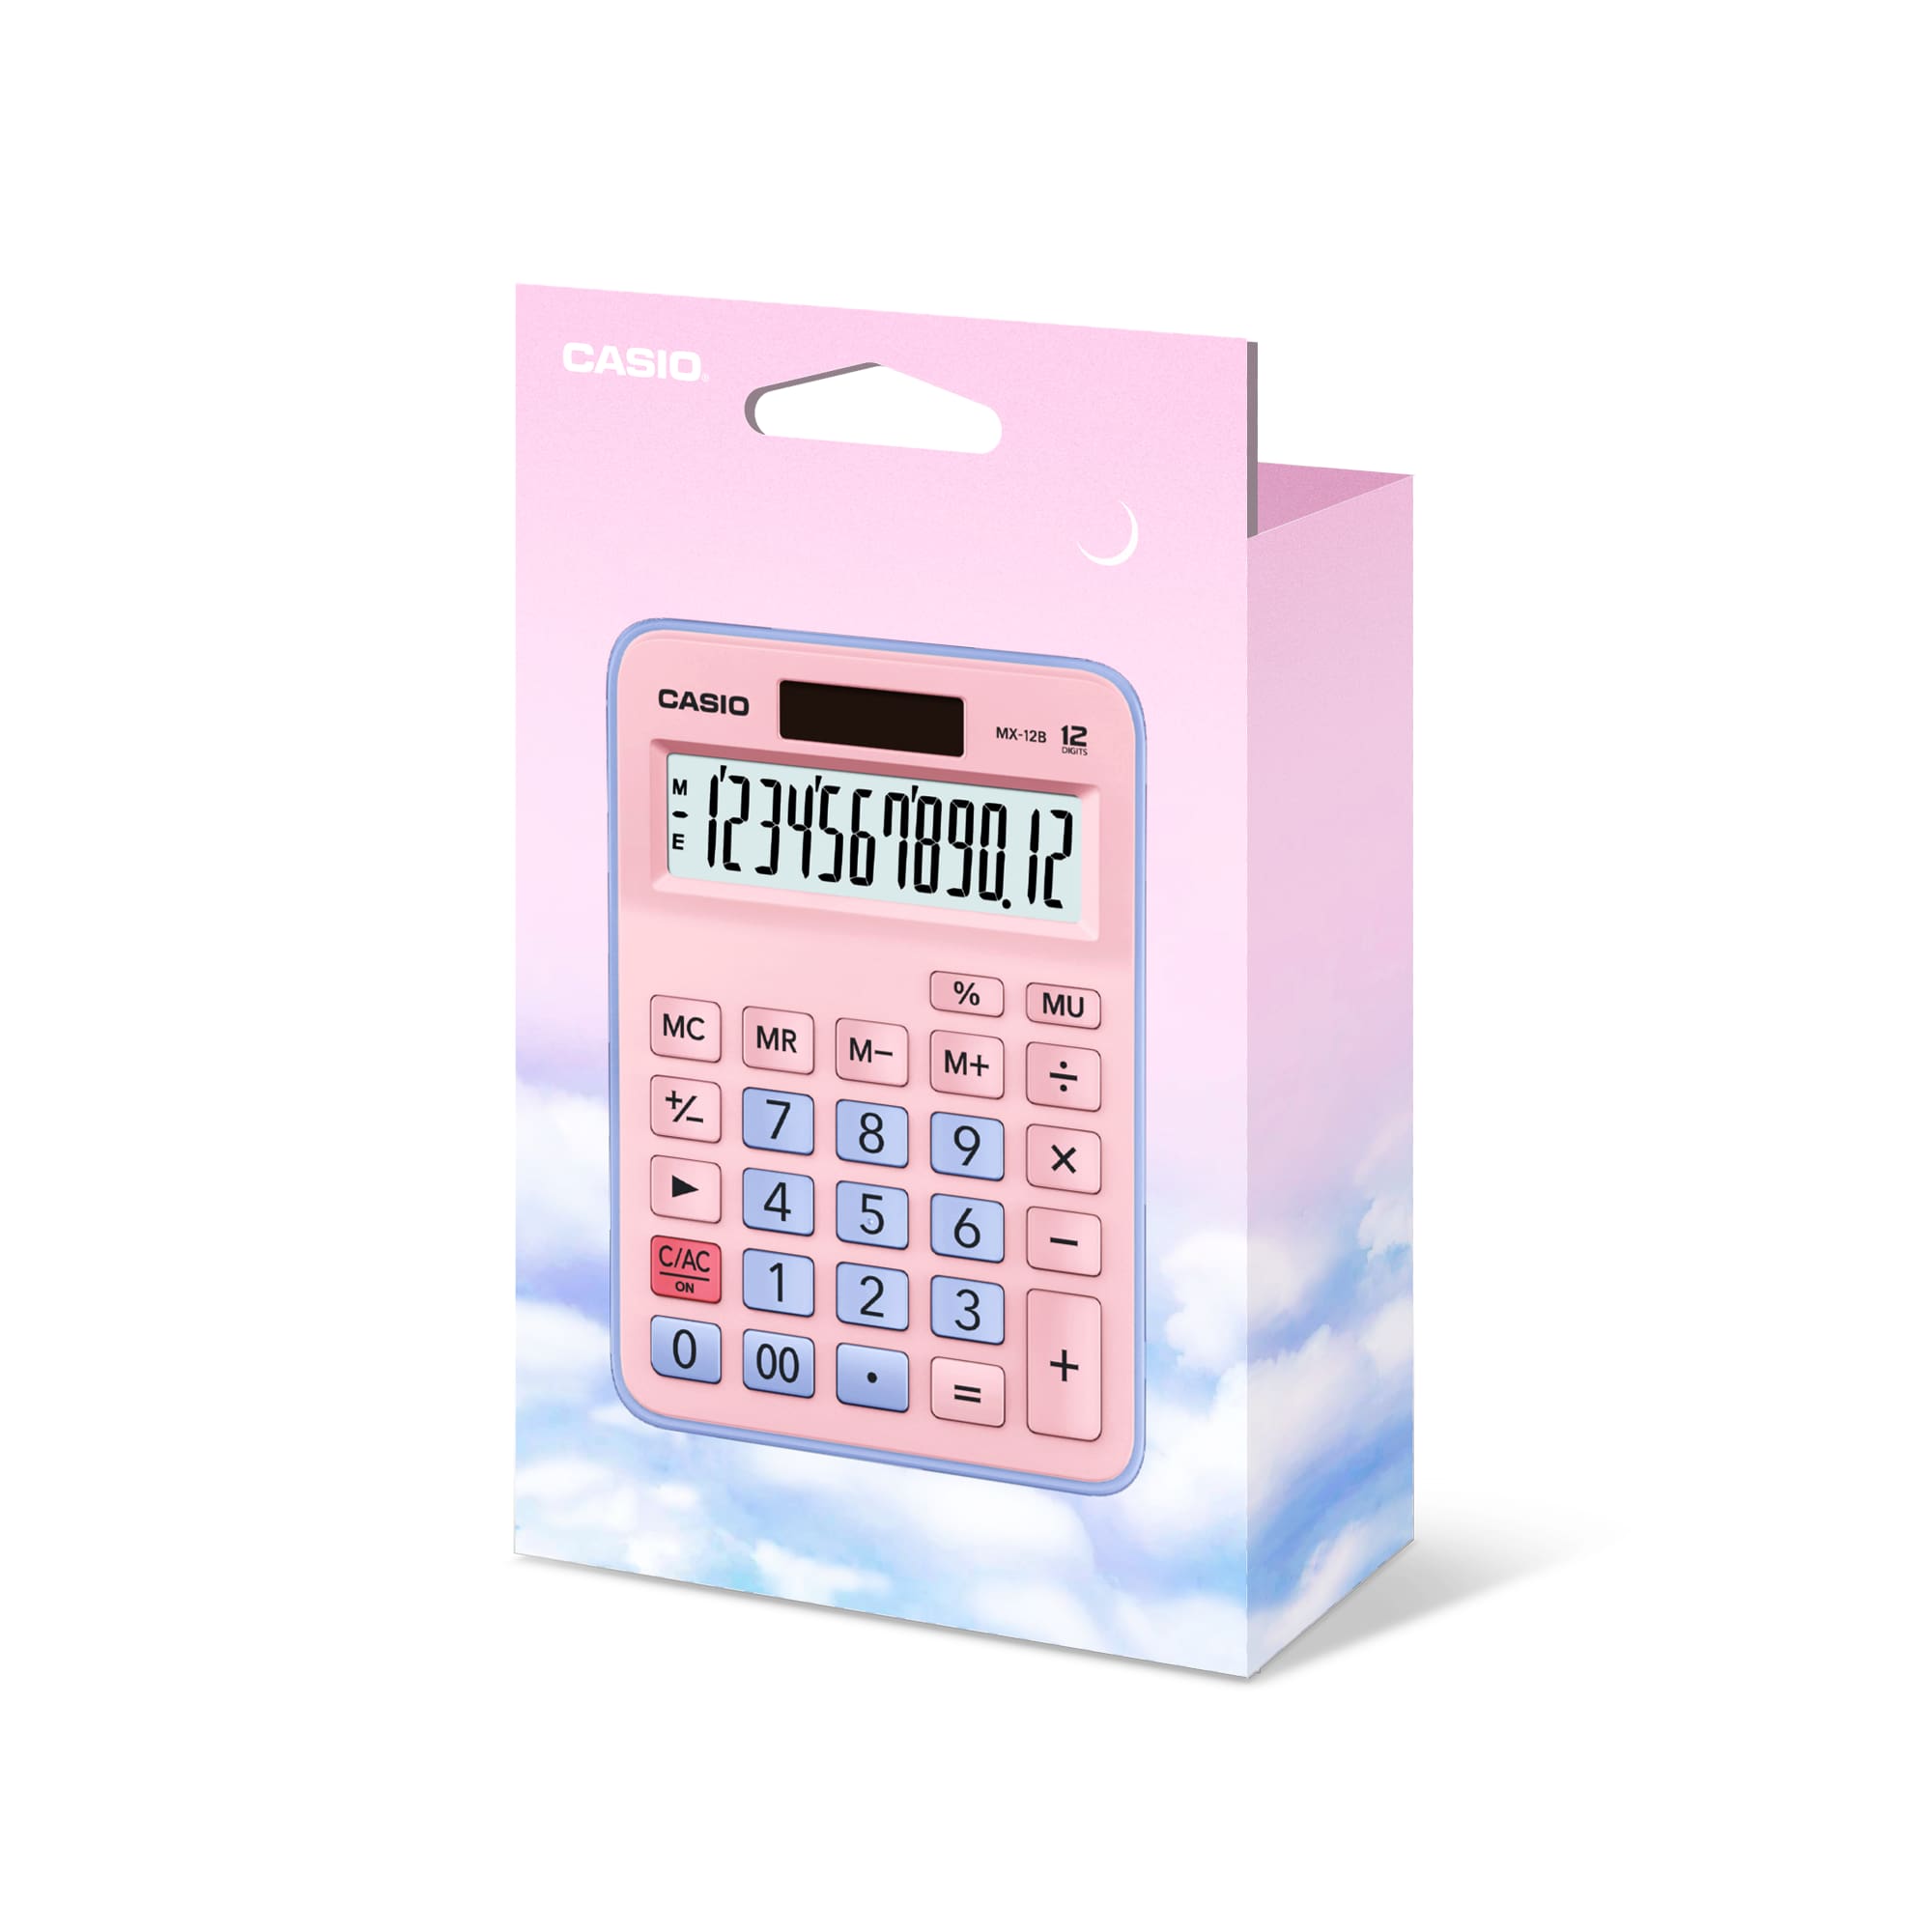 Calculadora Mini de Escritorio - CASIO MX-12B-PK